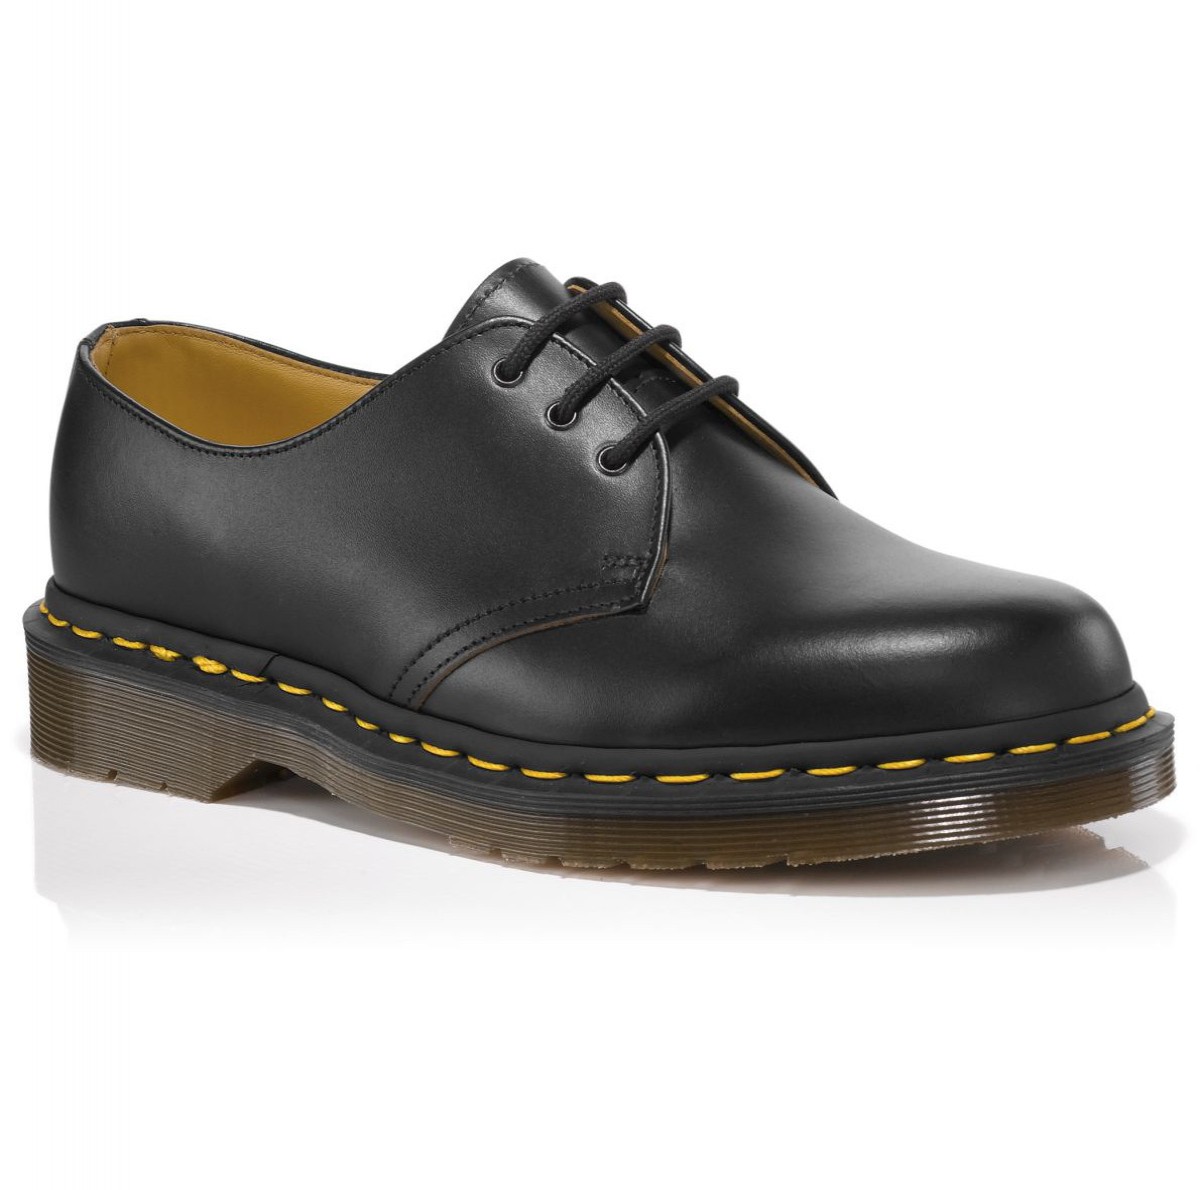 Dr Martens Vintage 1461 Black - Pediwear Footwear